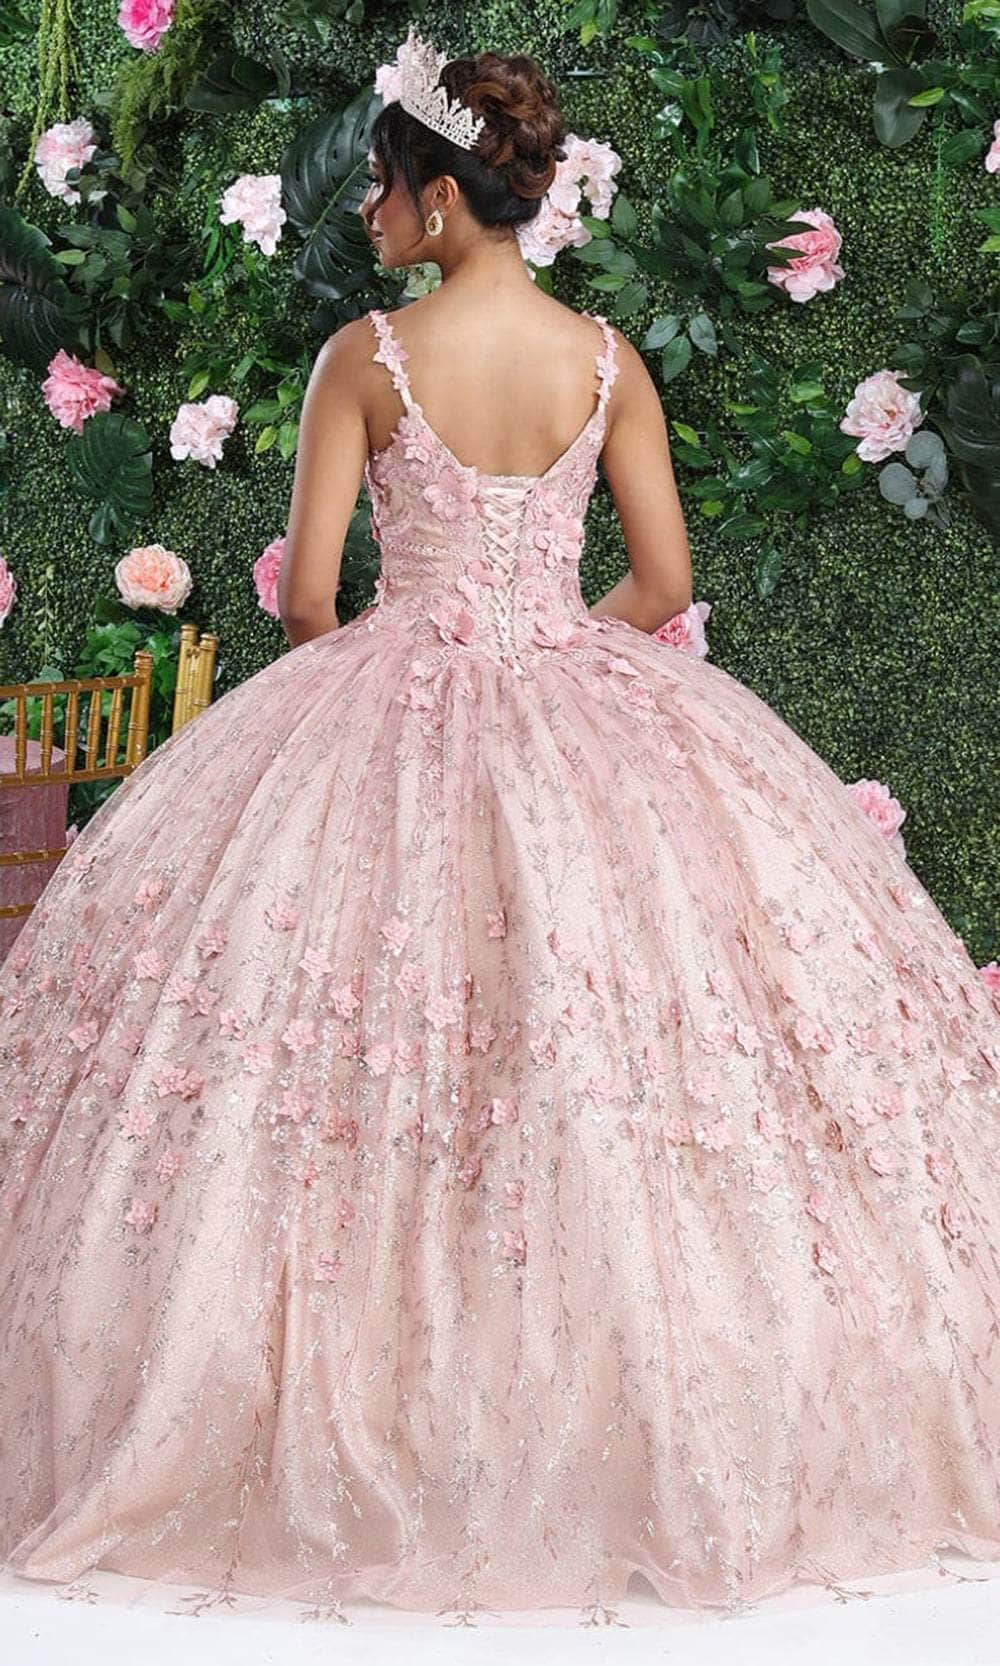 May Queen LK208 - Straight-Across Applique Ballgown Quinceanera Dresses 